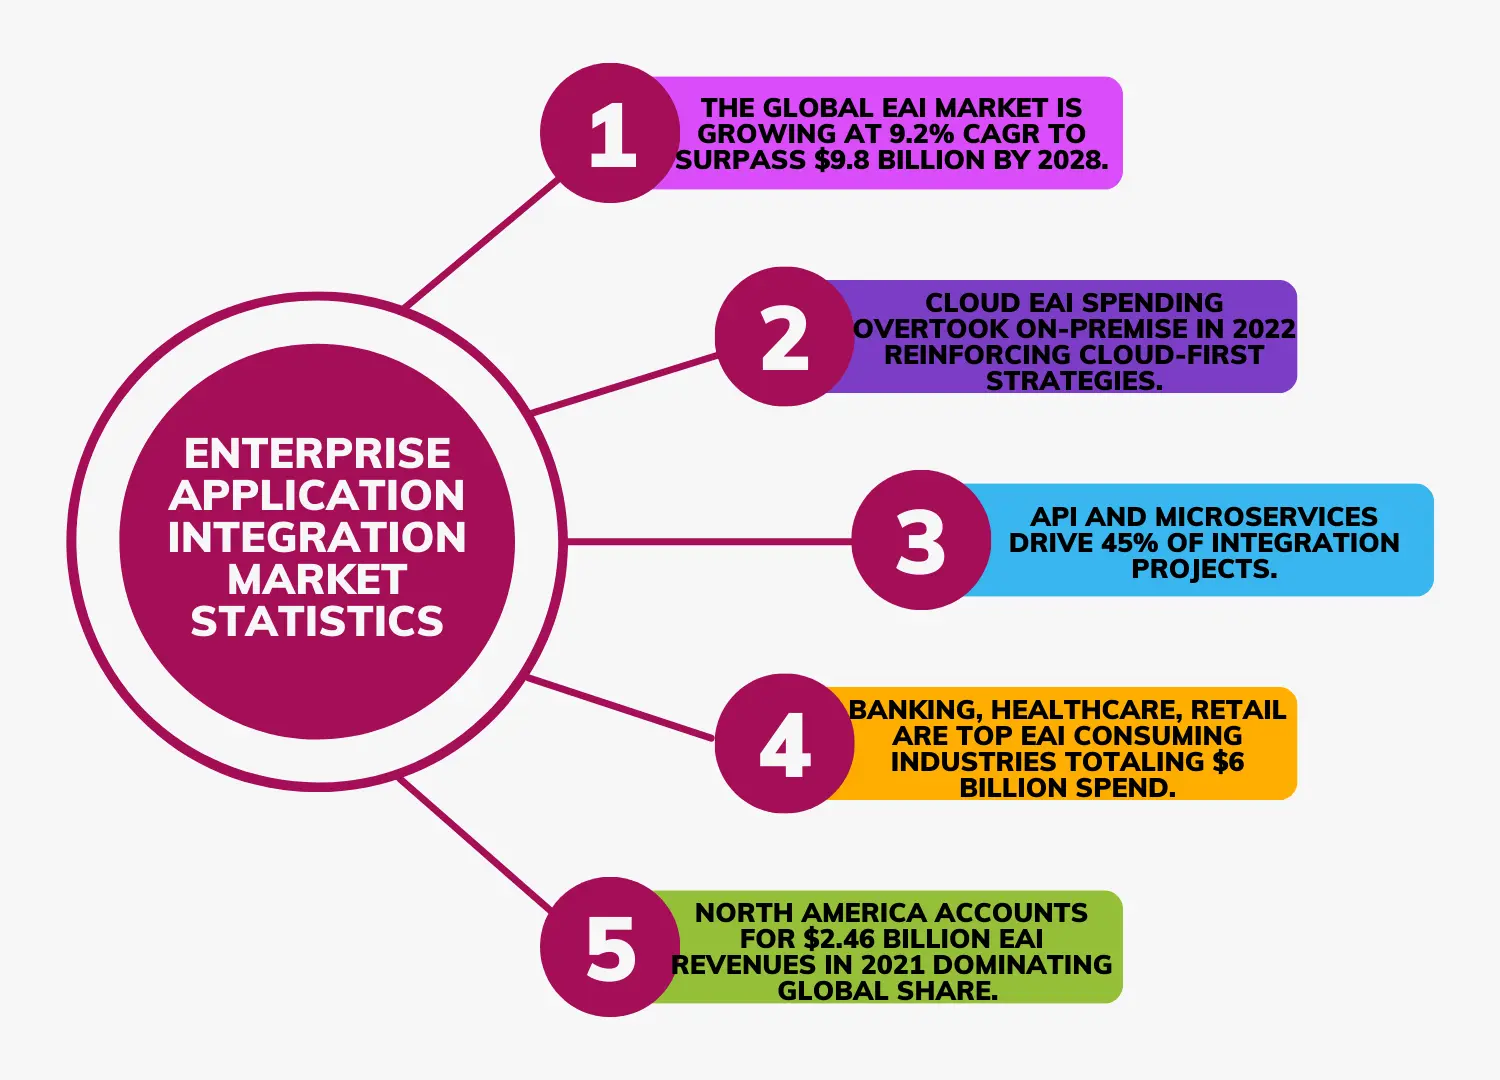 Enterprise Application Integration Market Statistics